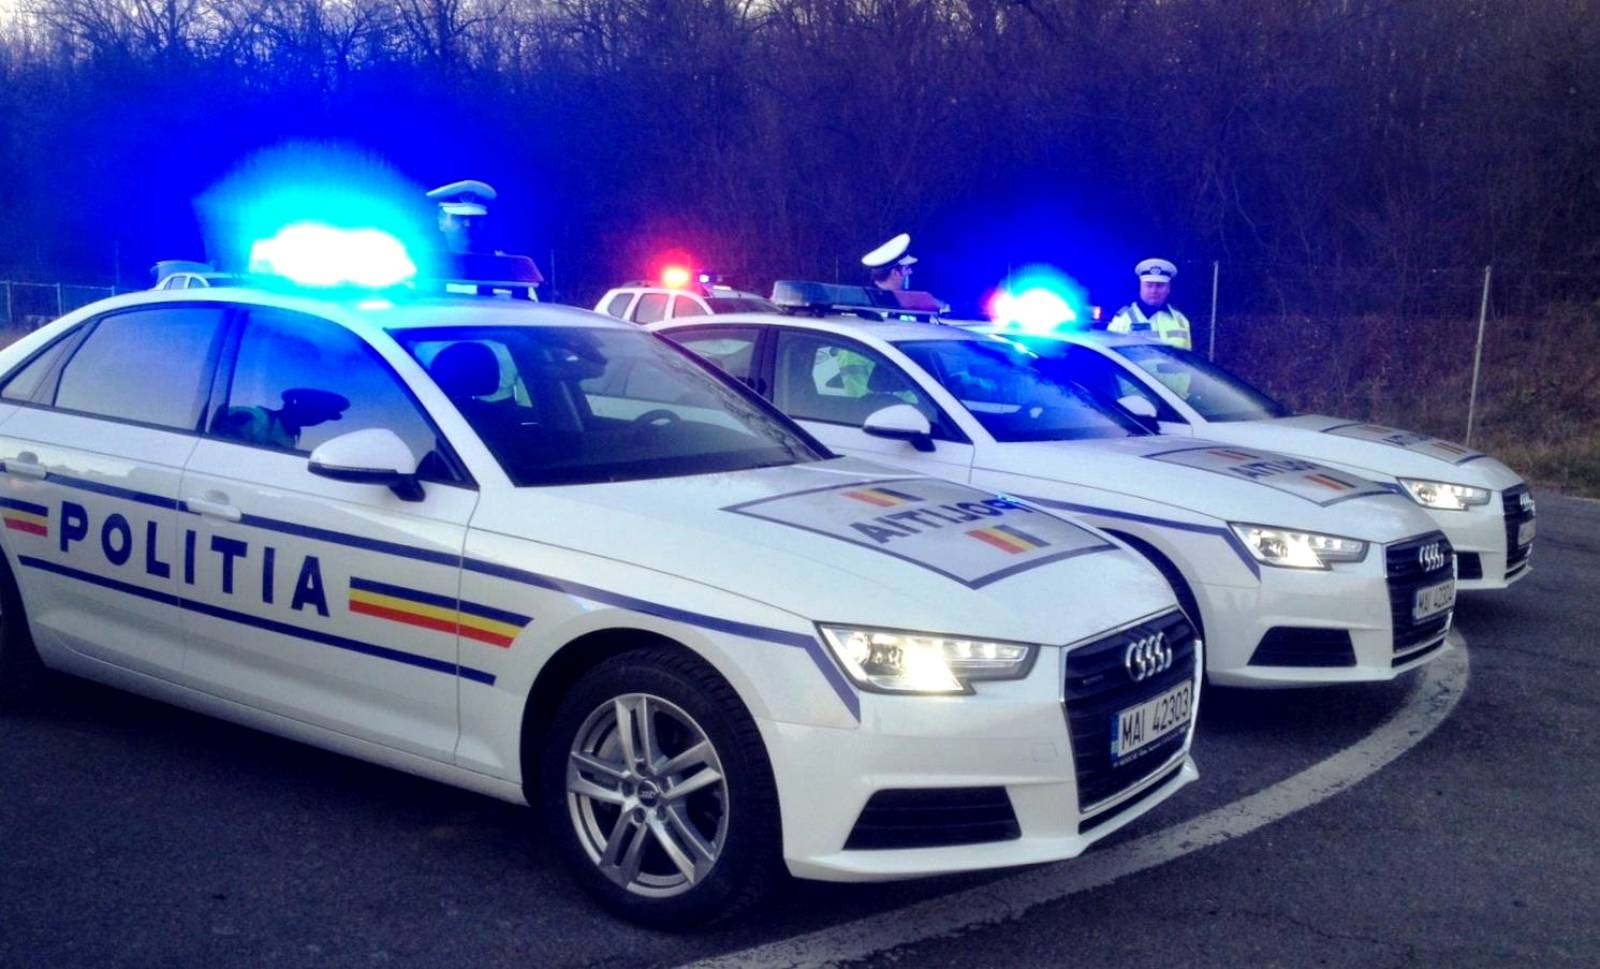 Romanian police warning racers